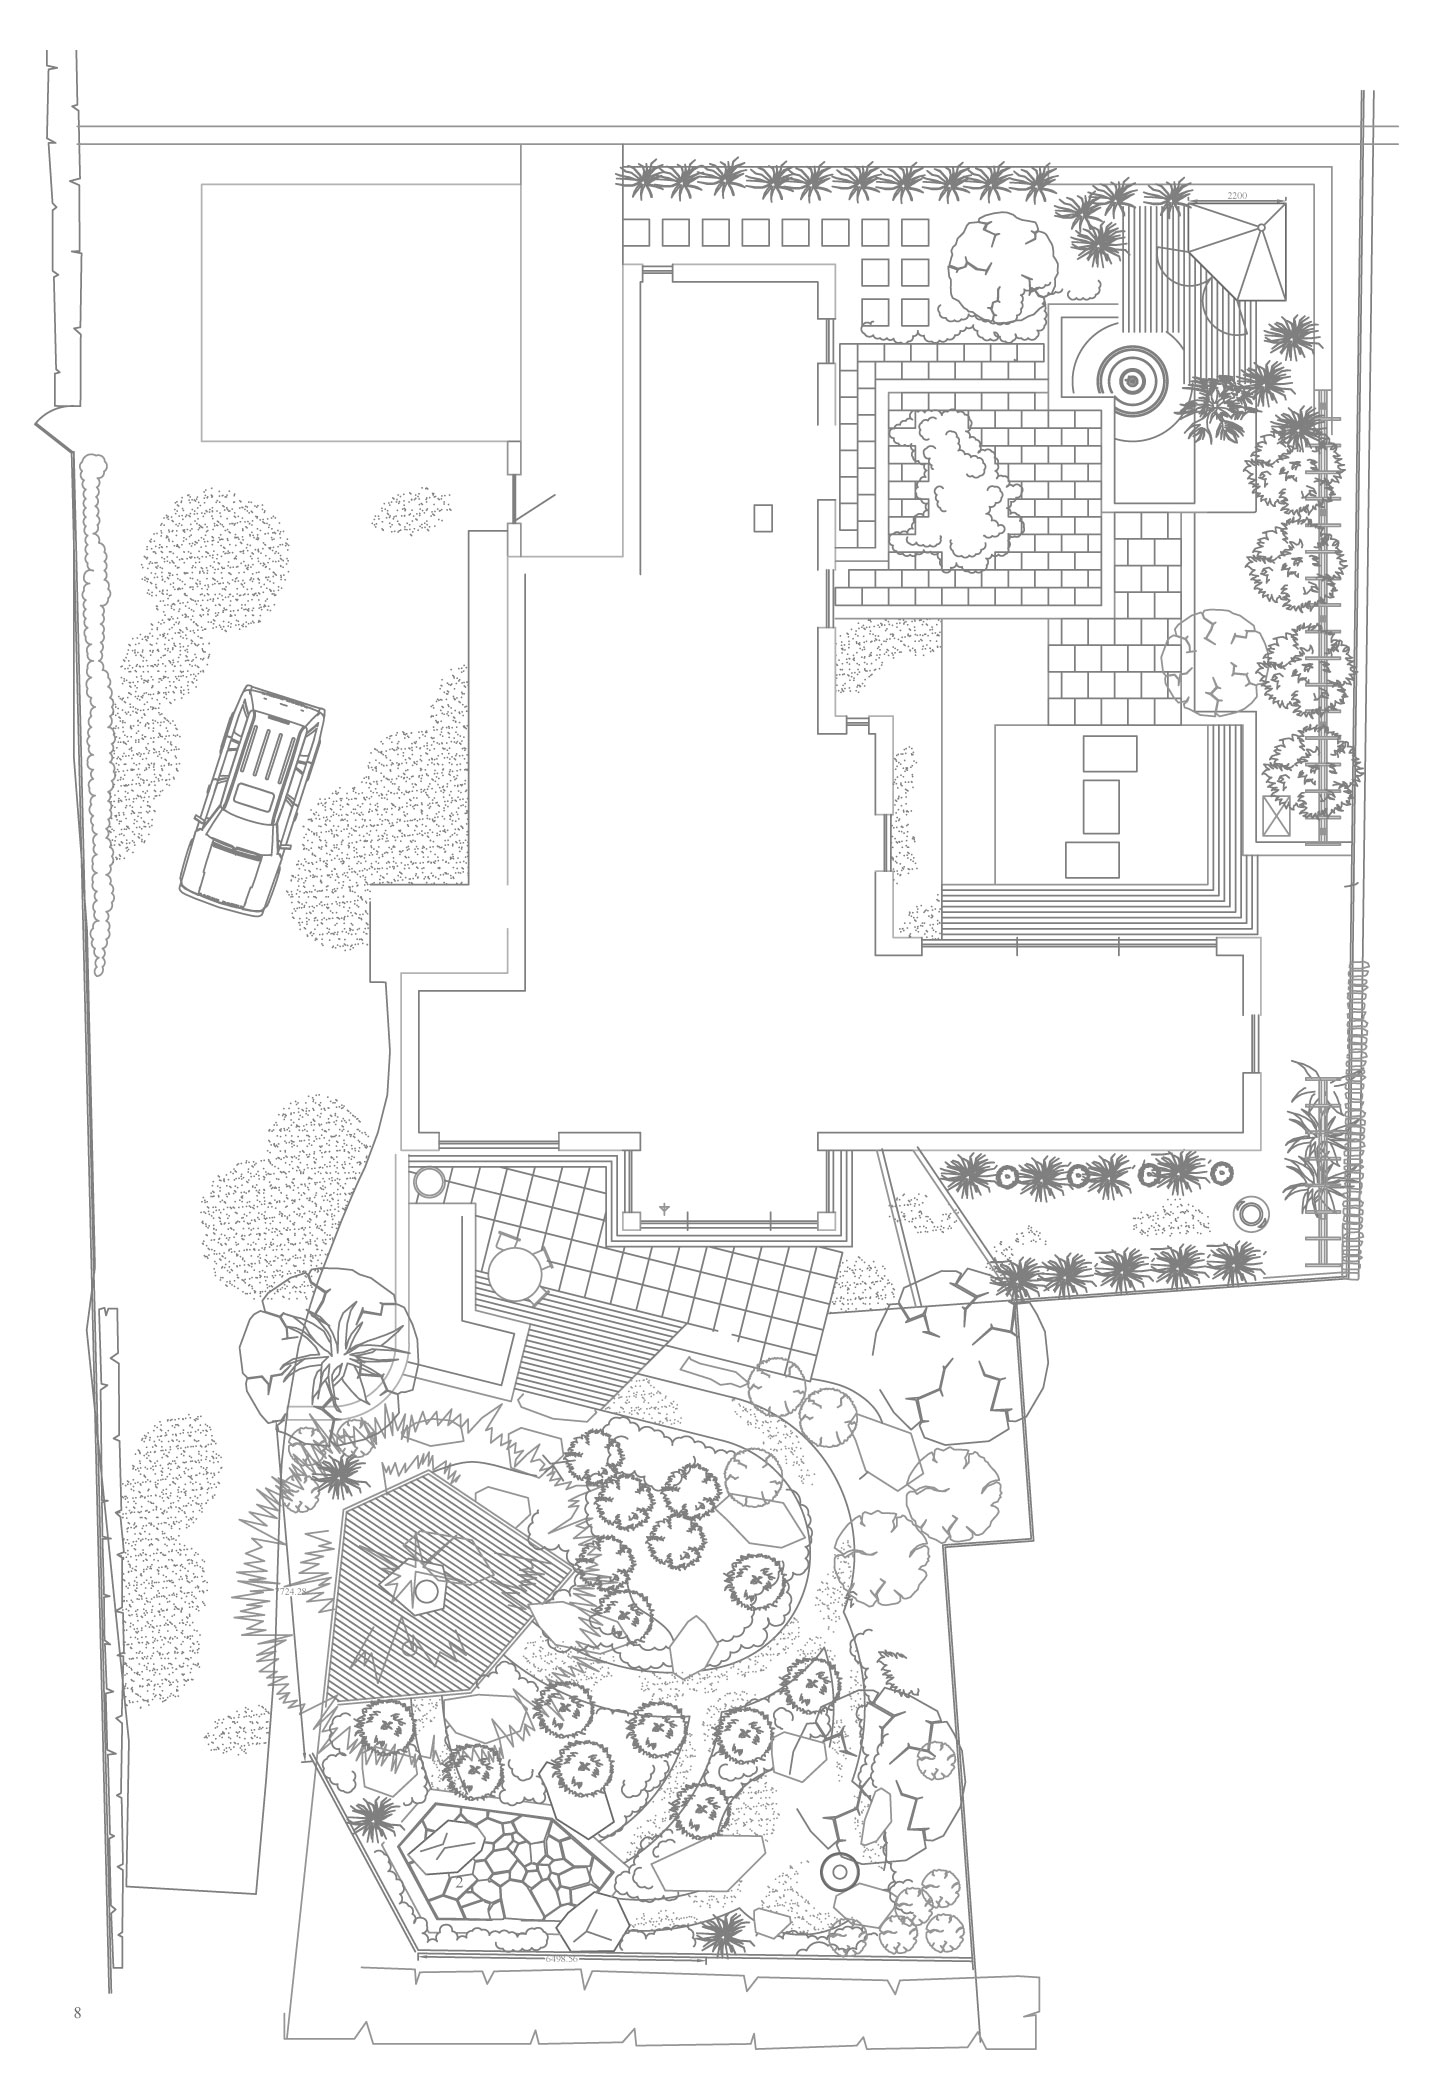 Landscape layout plan for contemporary Cambridgeshire garden designed by Peter Eustance